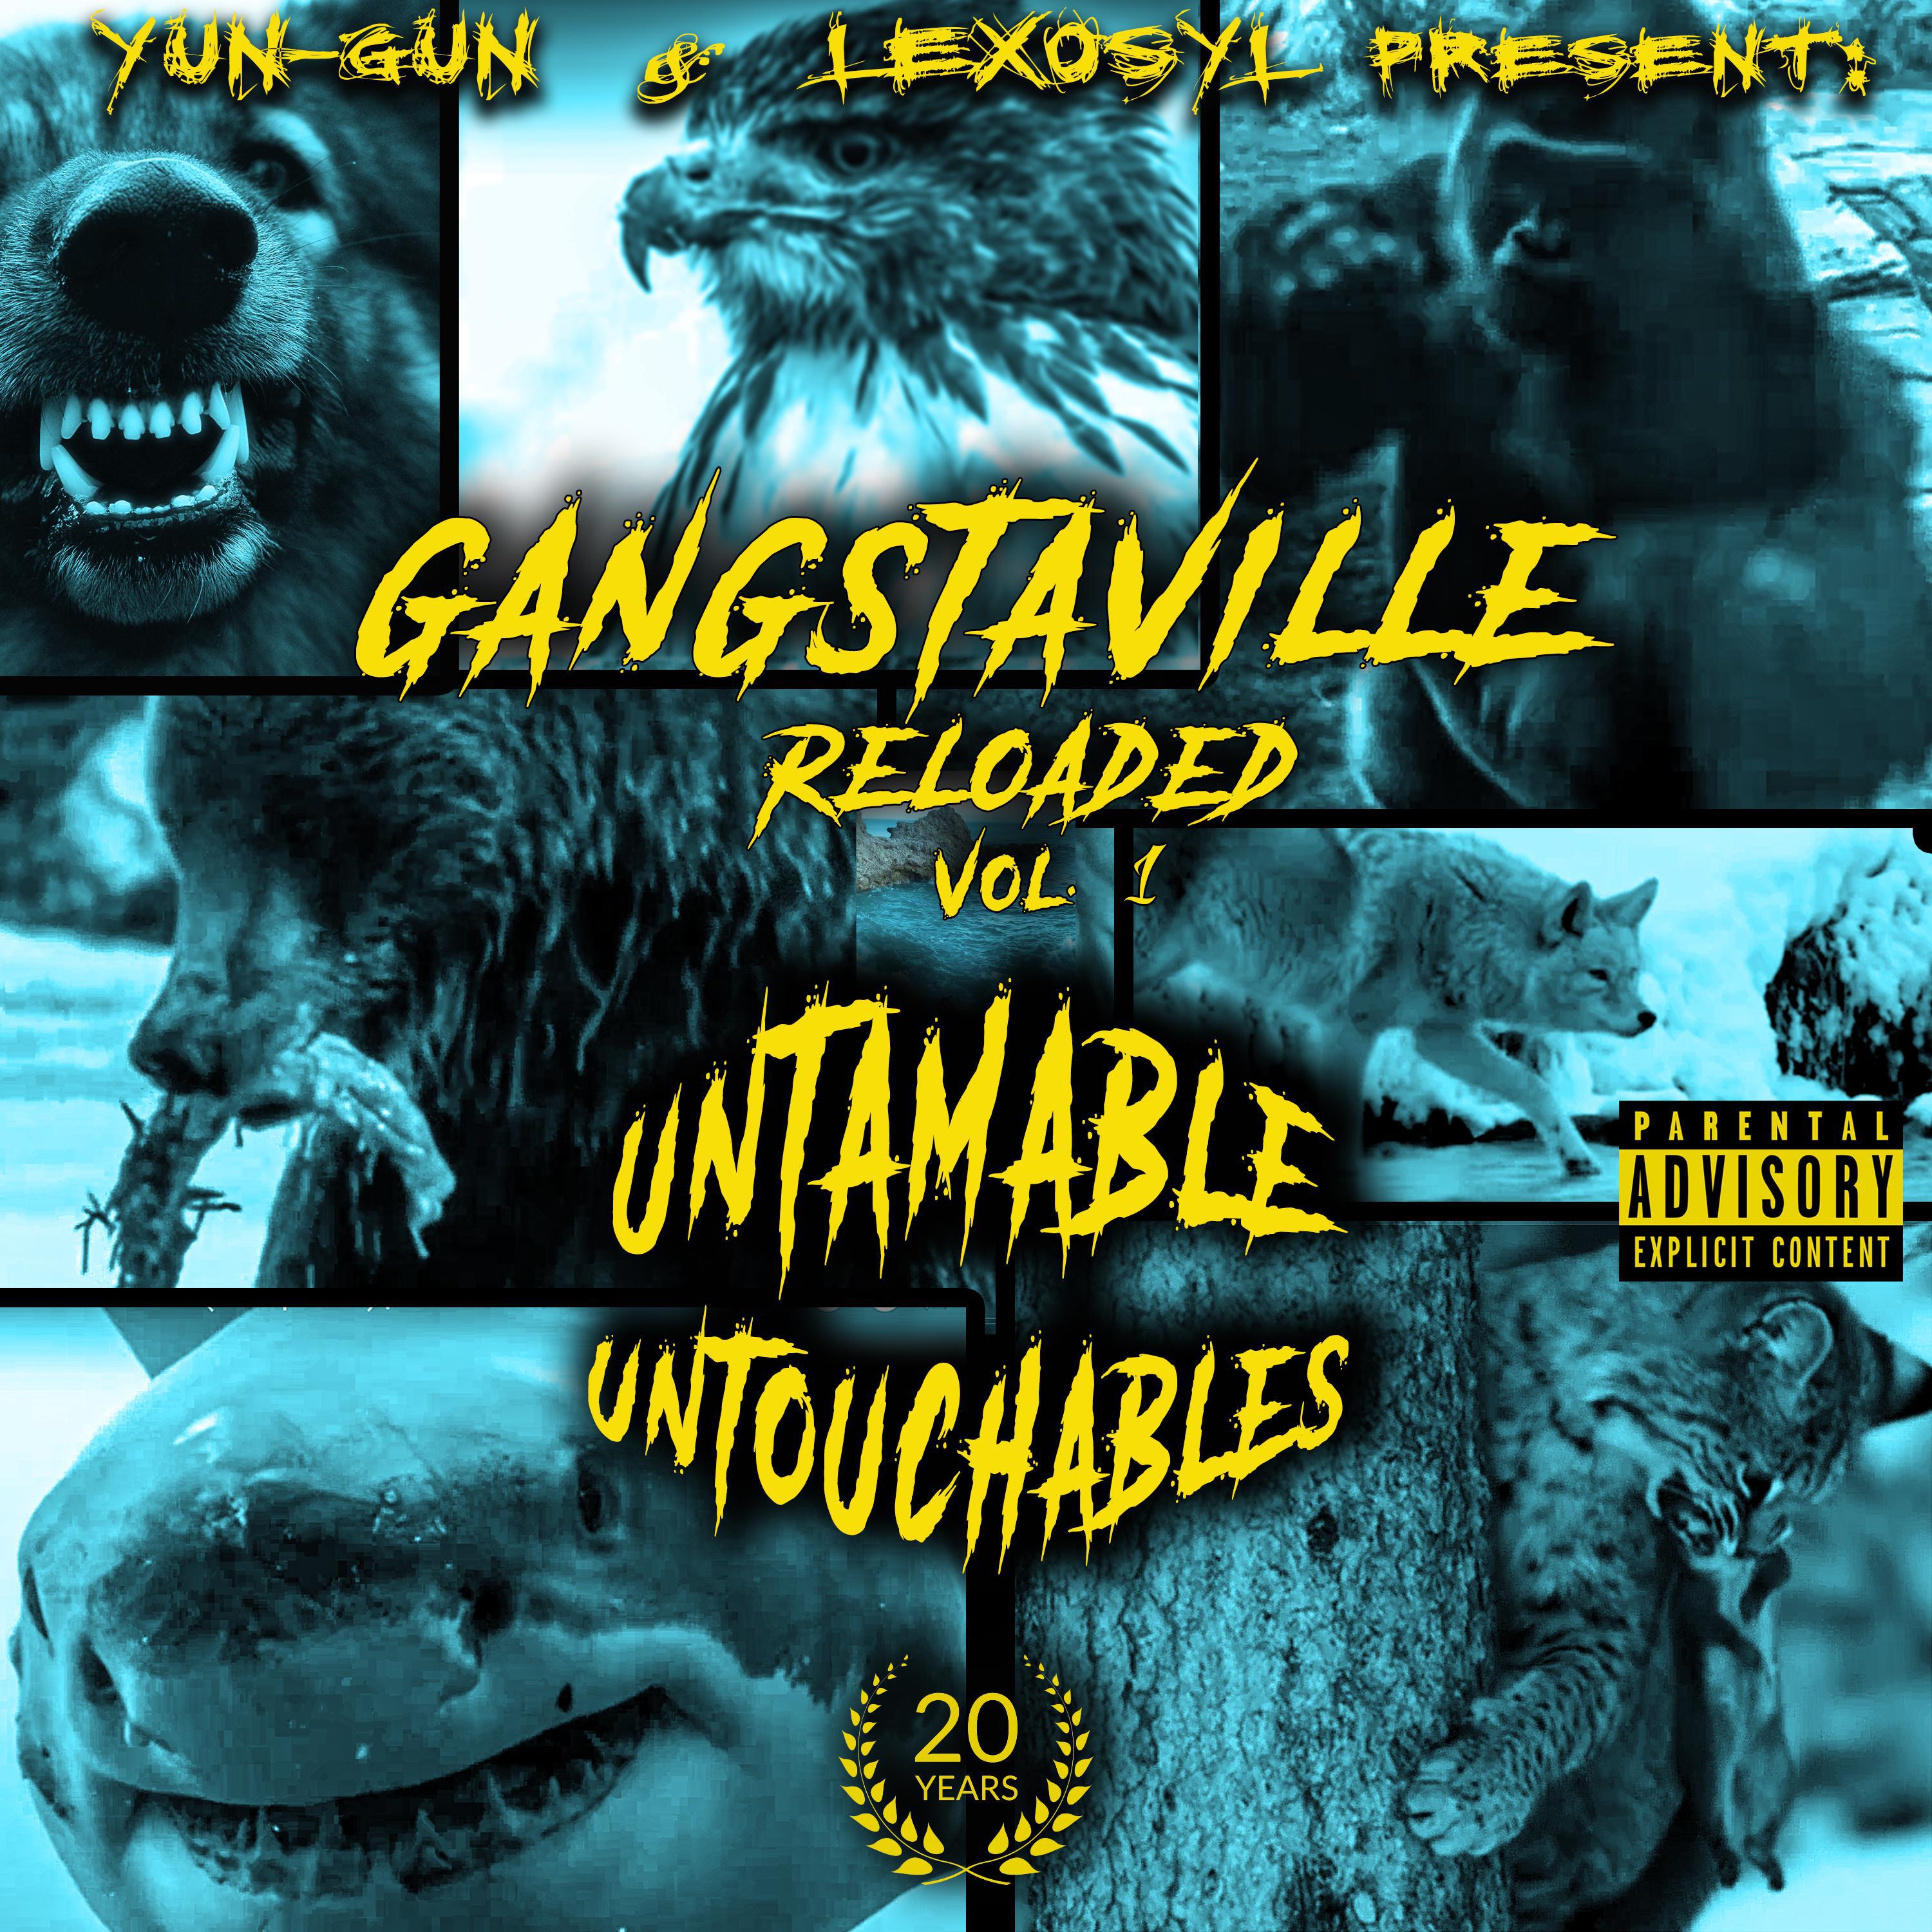 Lexosyl - Chase It (feat. The Untouchables & Dog Child)